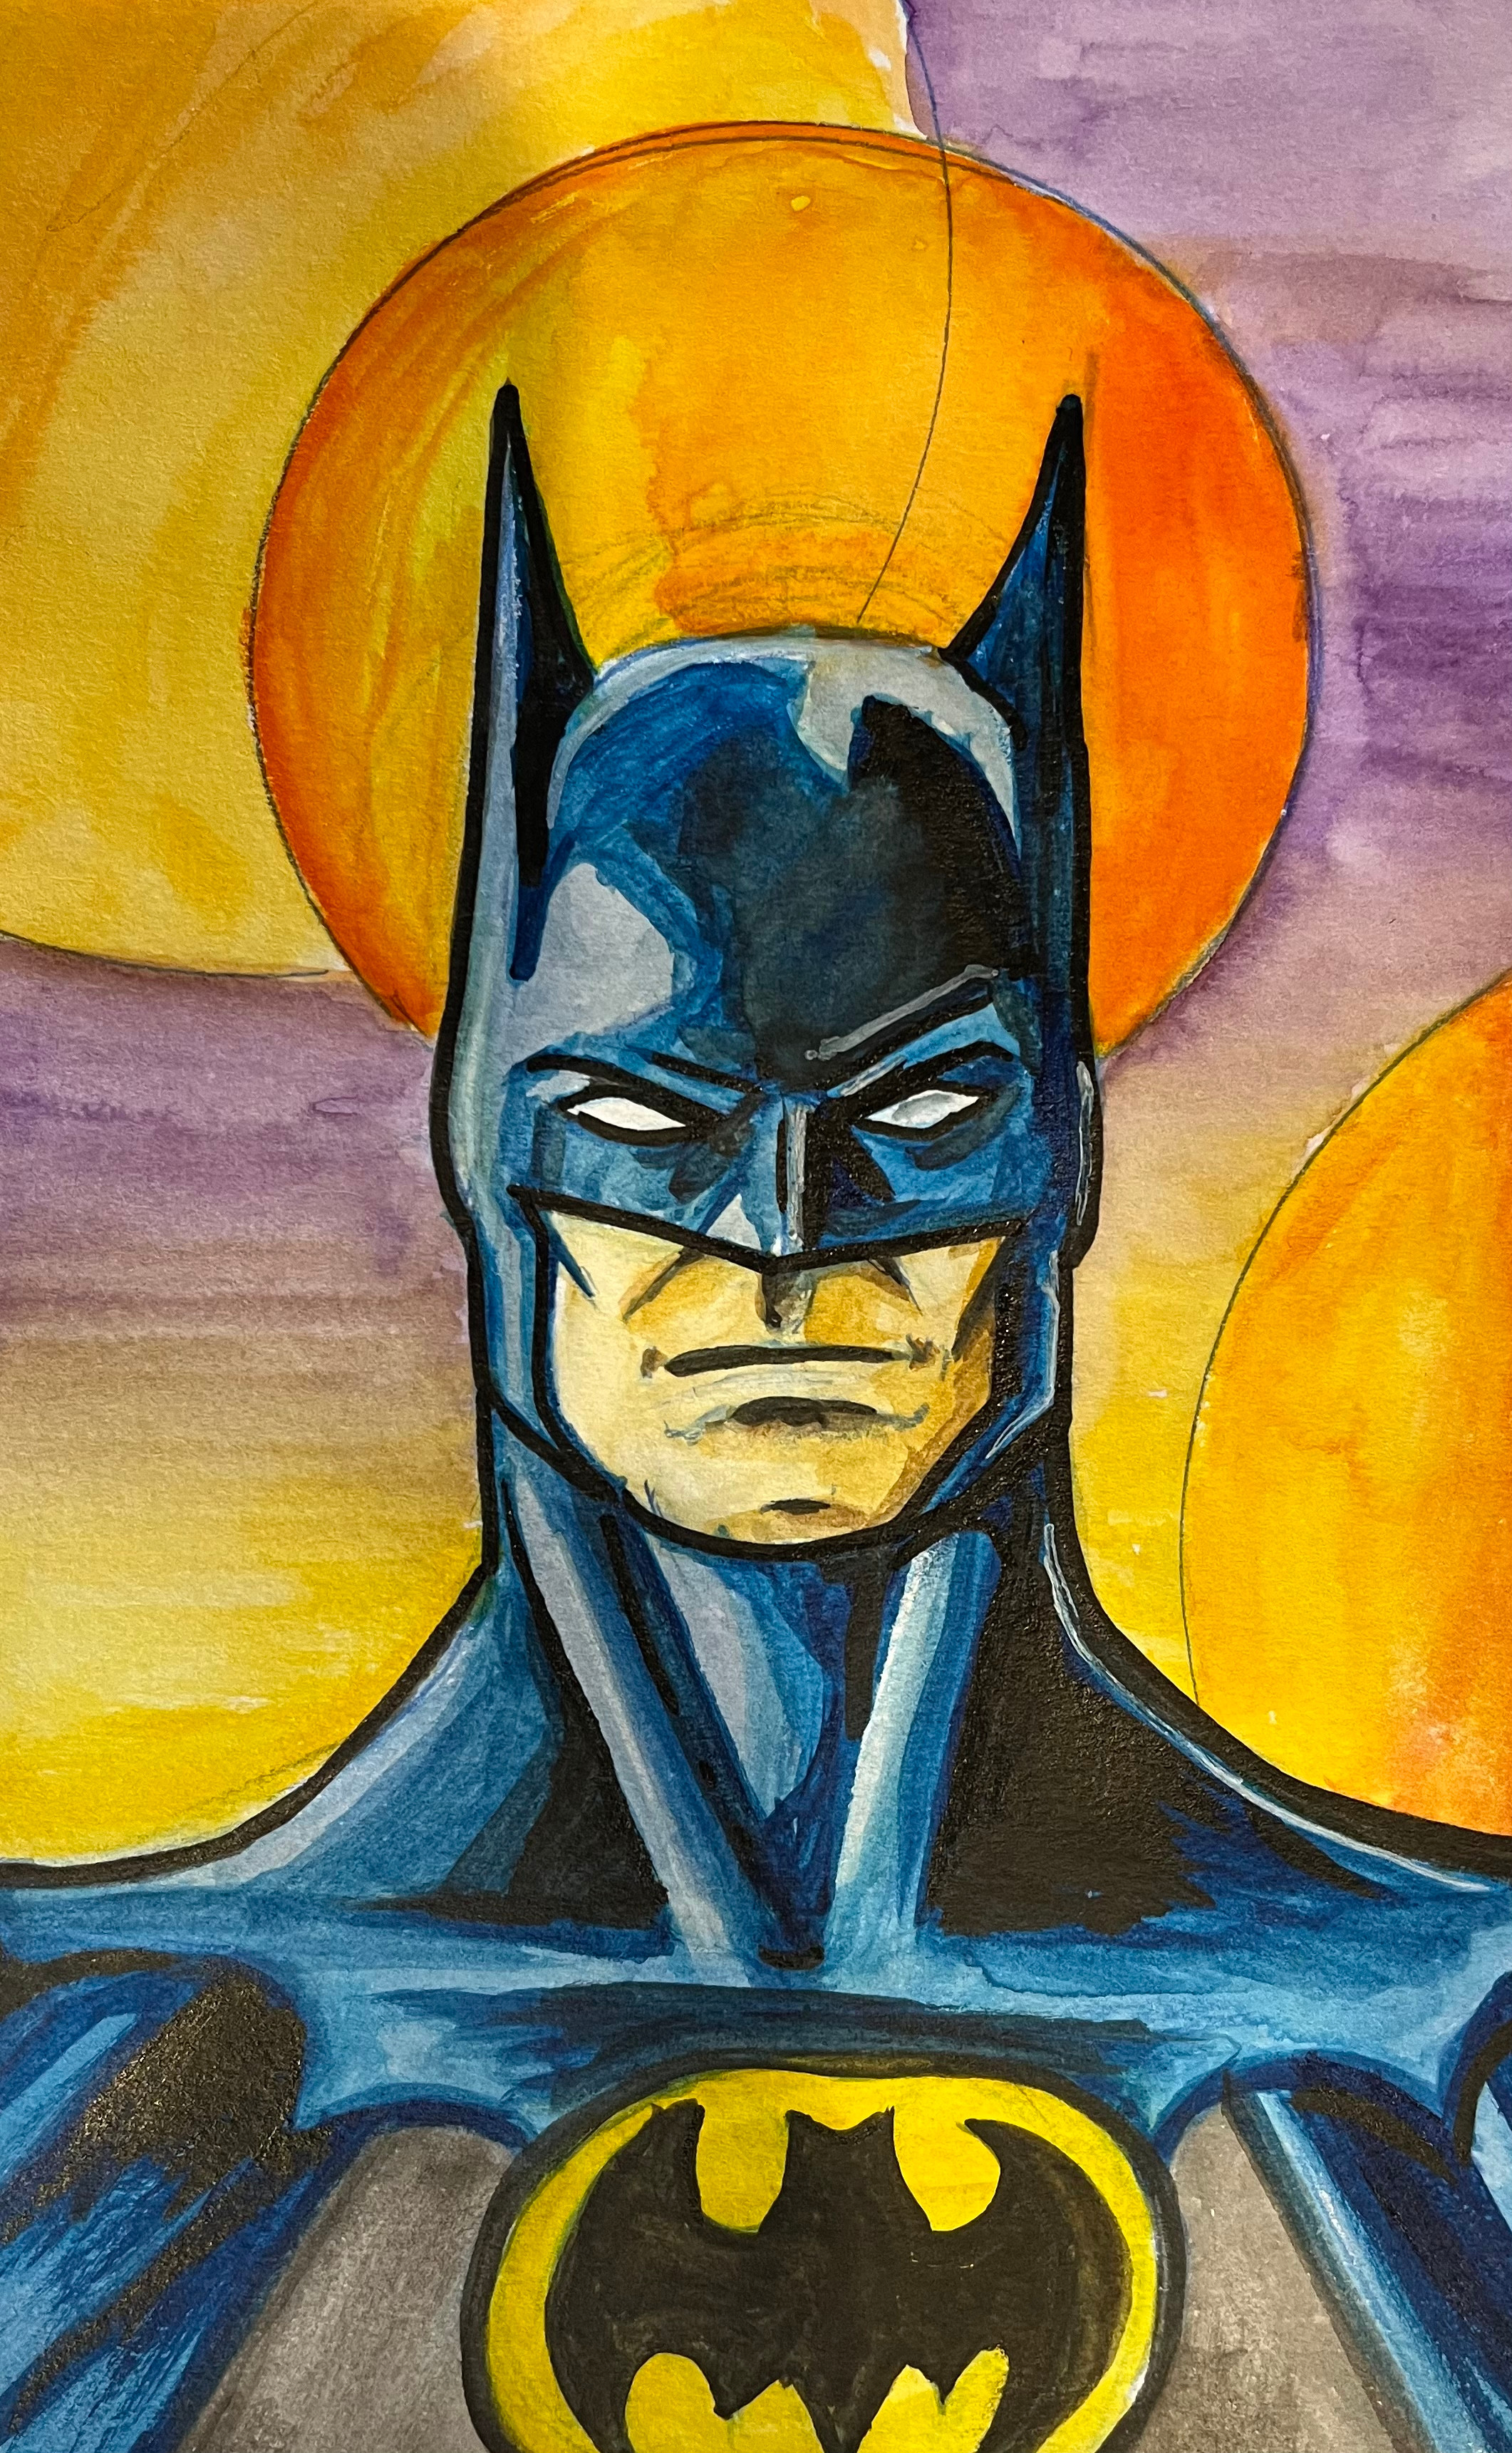 ArtStation - Batman Watercolor